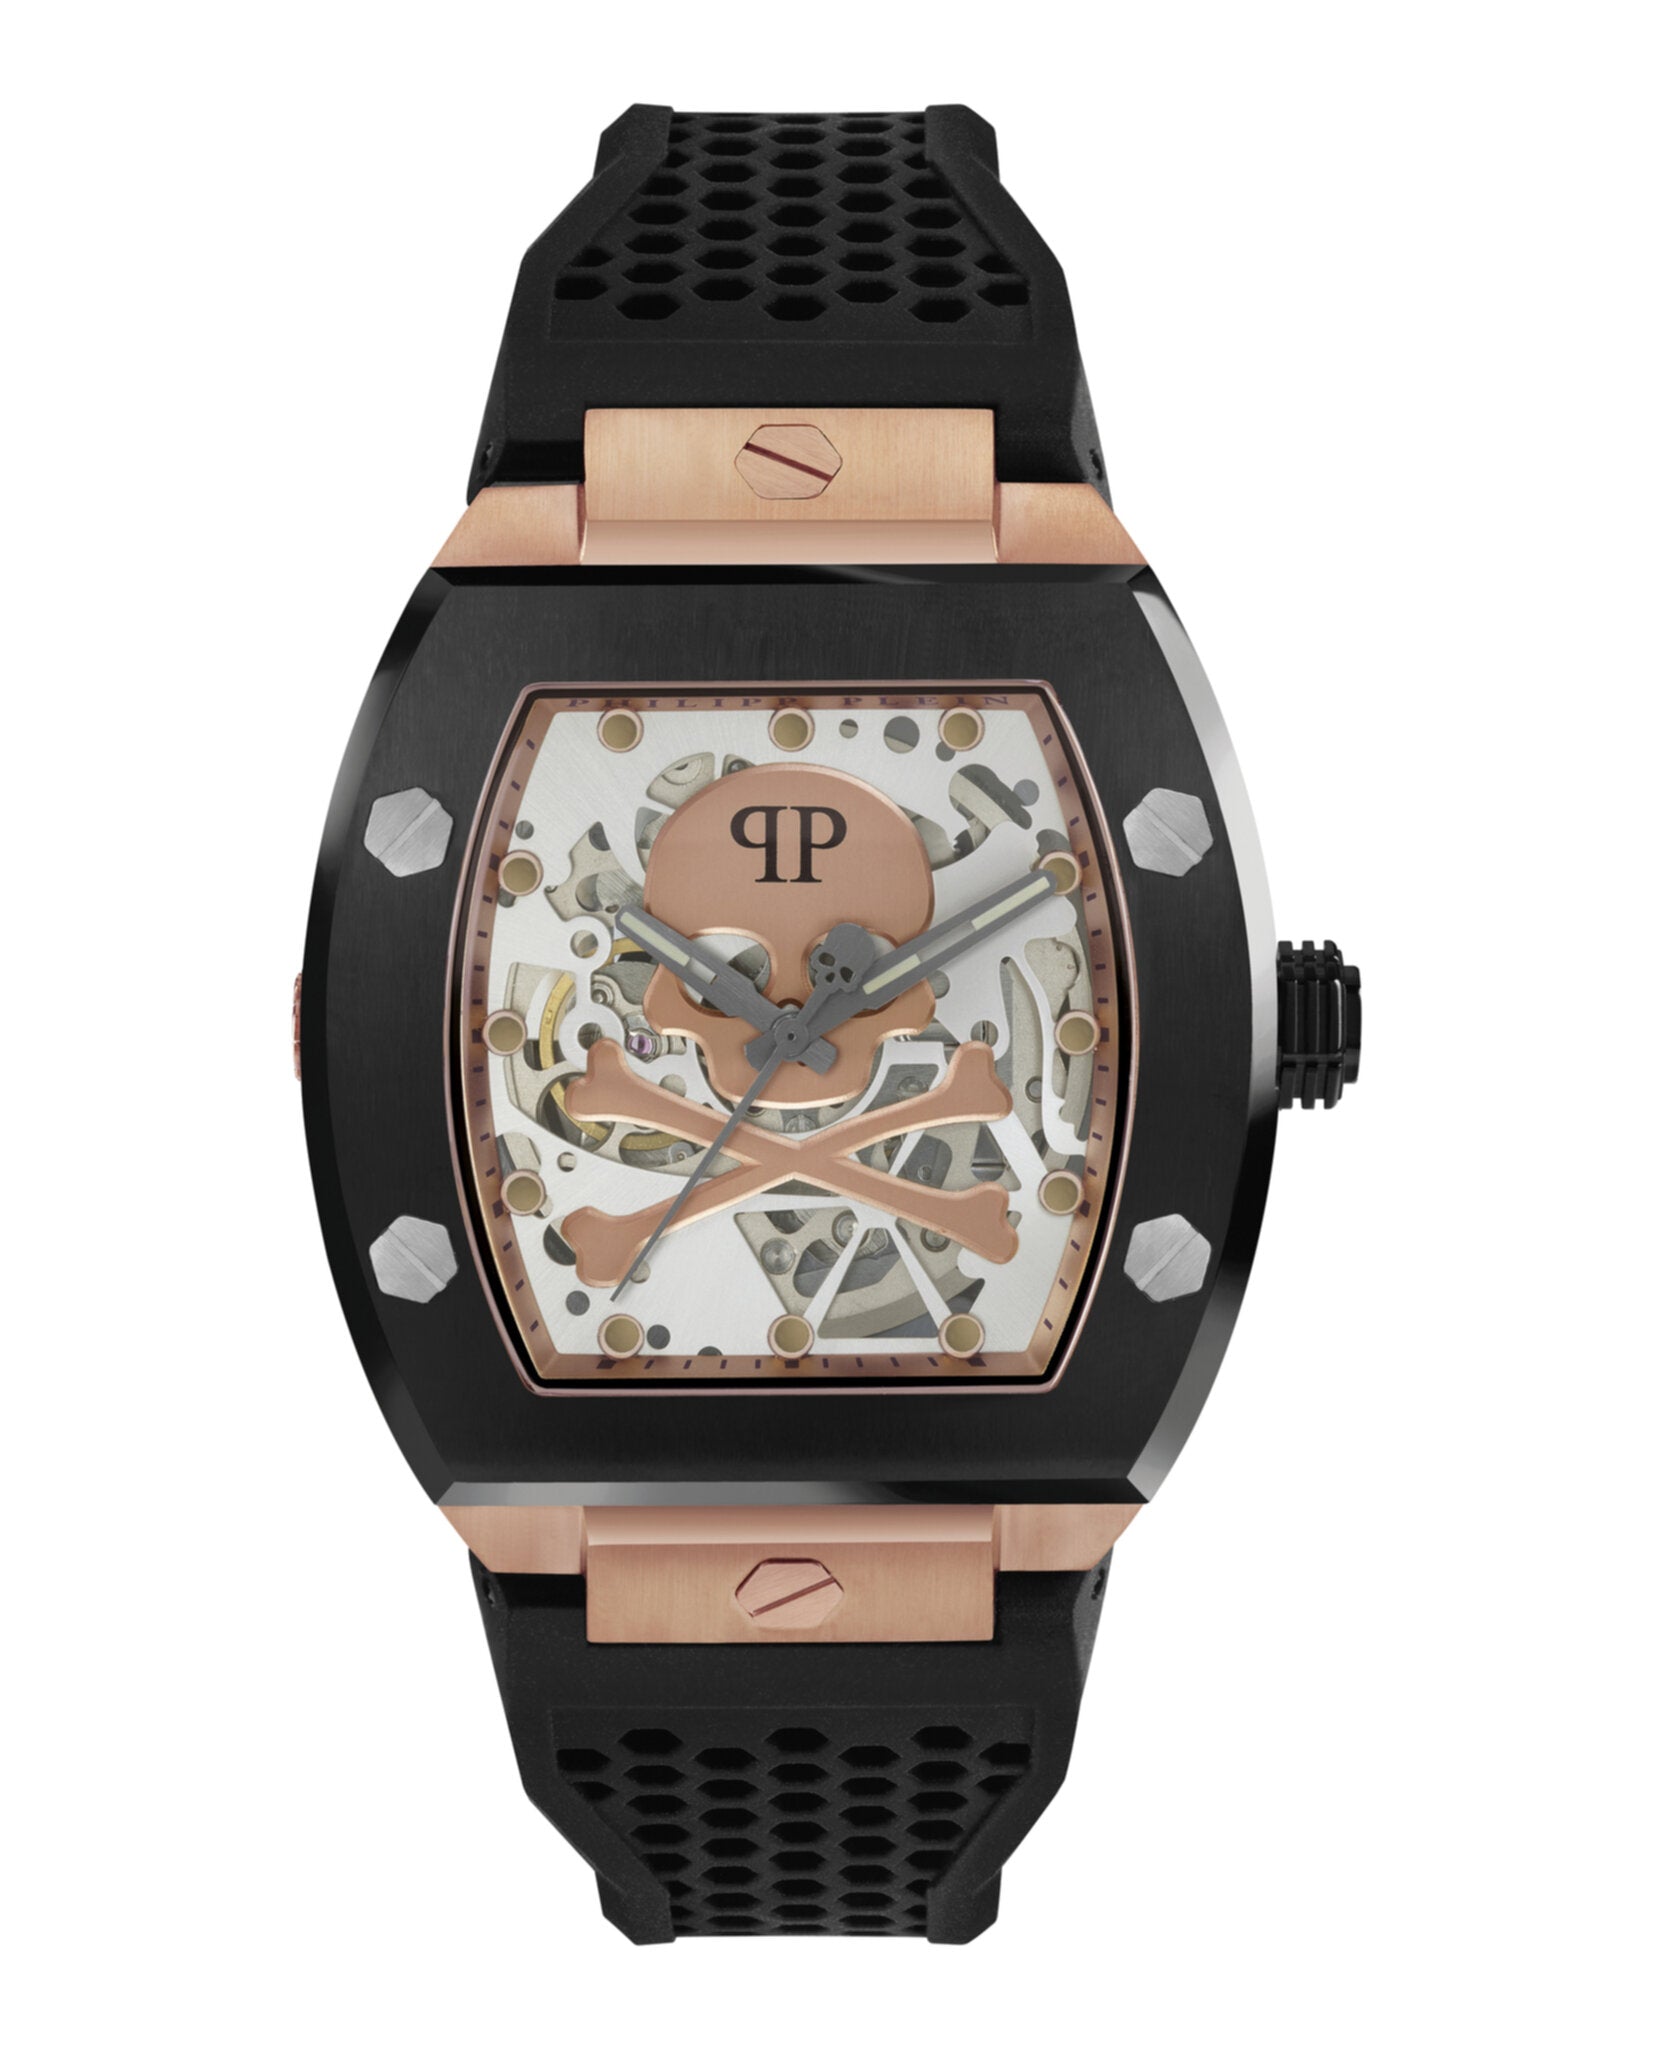 The $keleton Automatic Watch